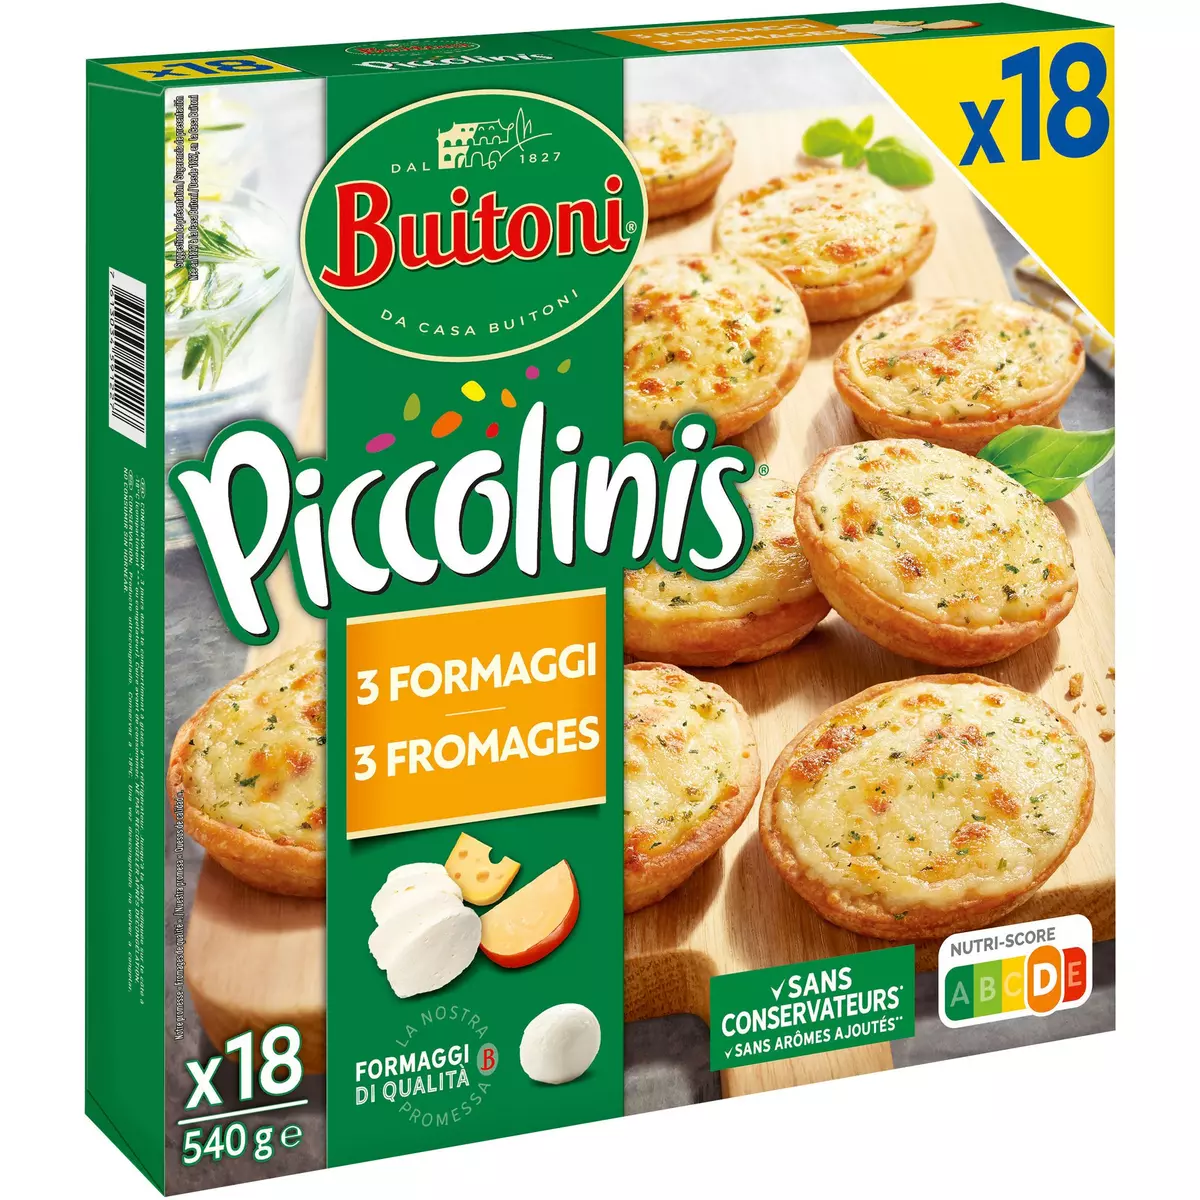 BUITONI Piccolinis Mini pizza aux 3 fromages 18 pièces  540g